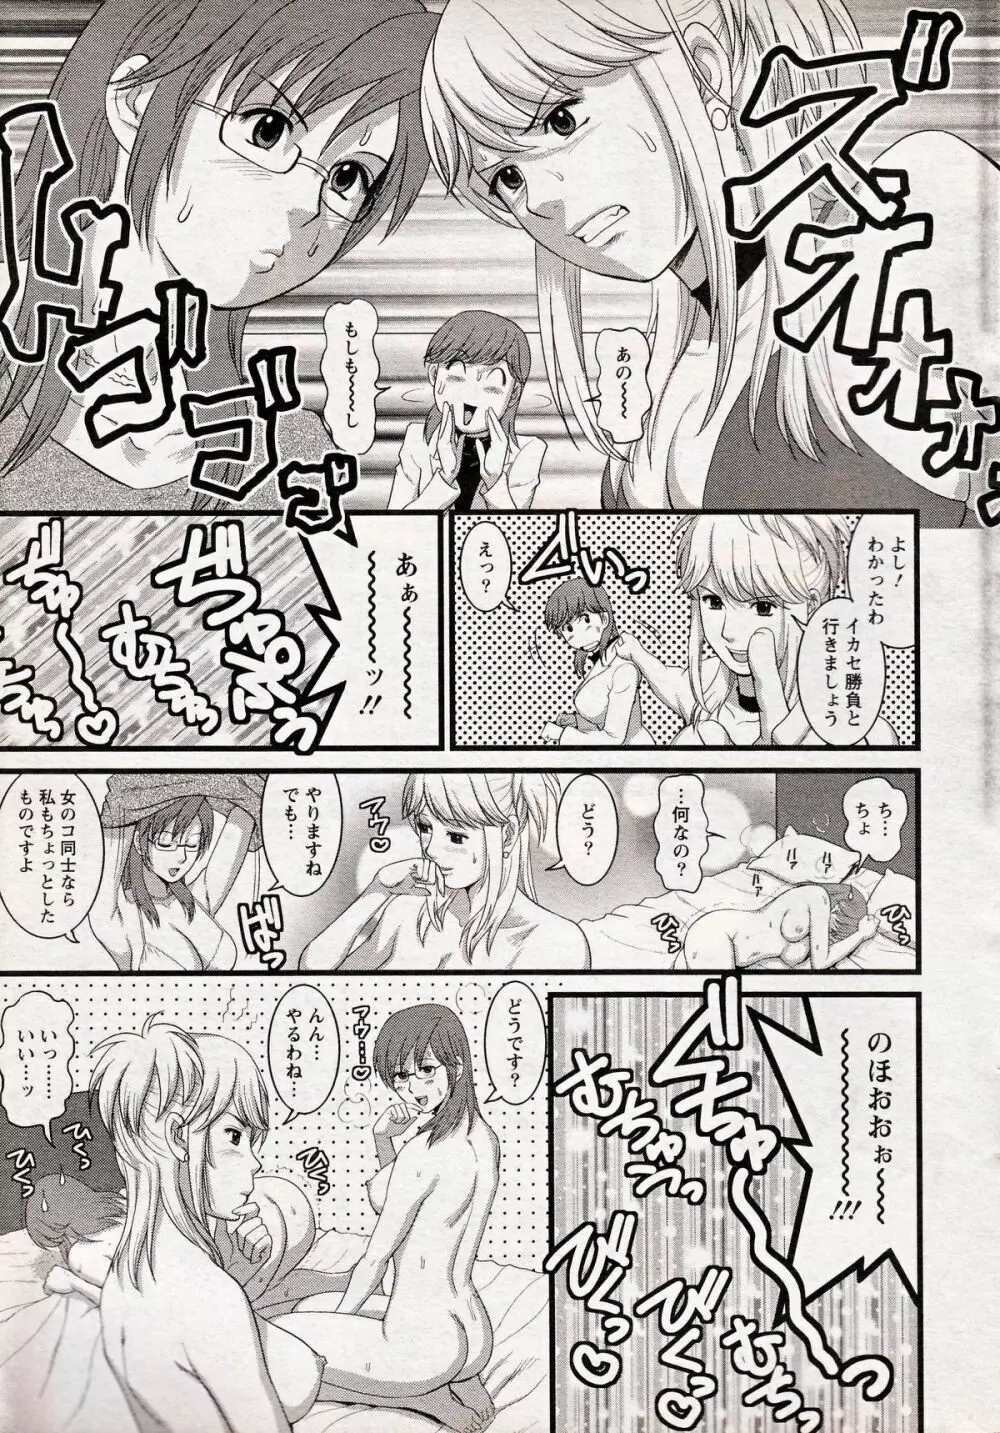 Haken no Muuko-san 13 11ページ